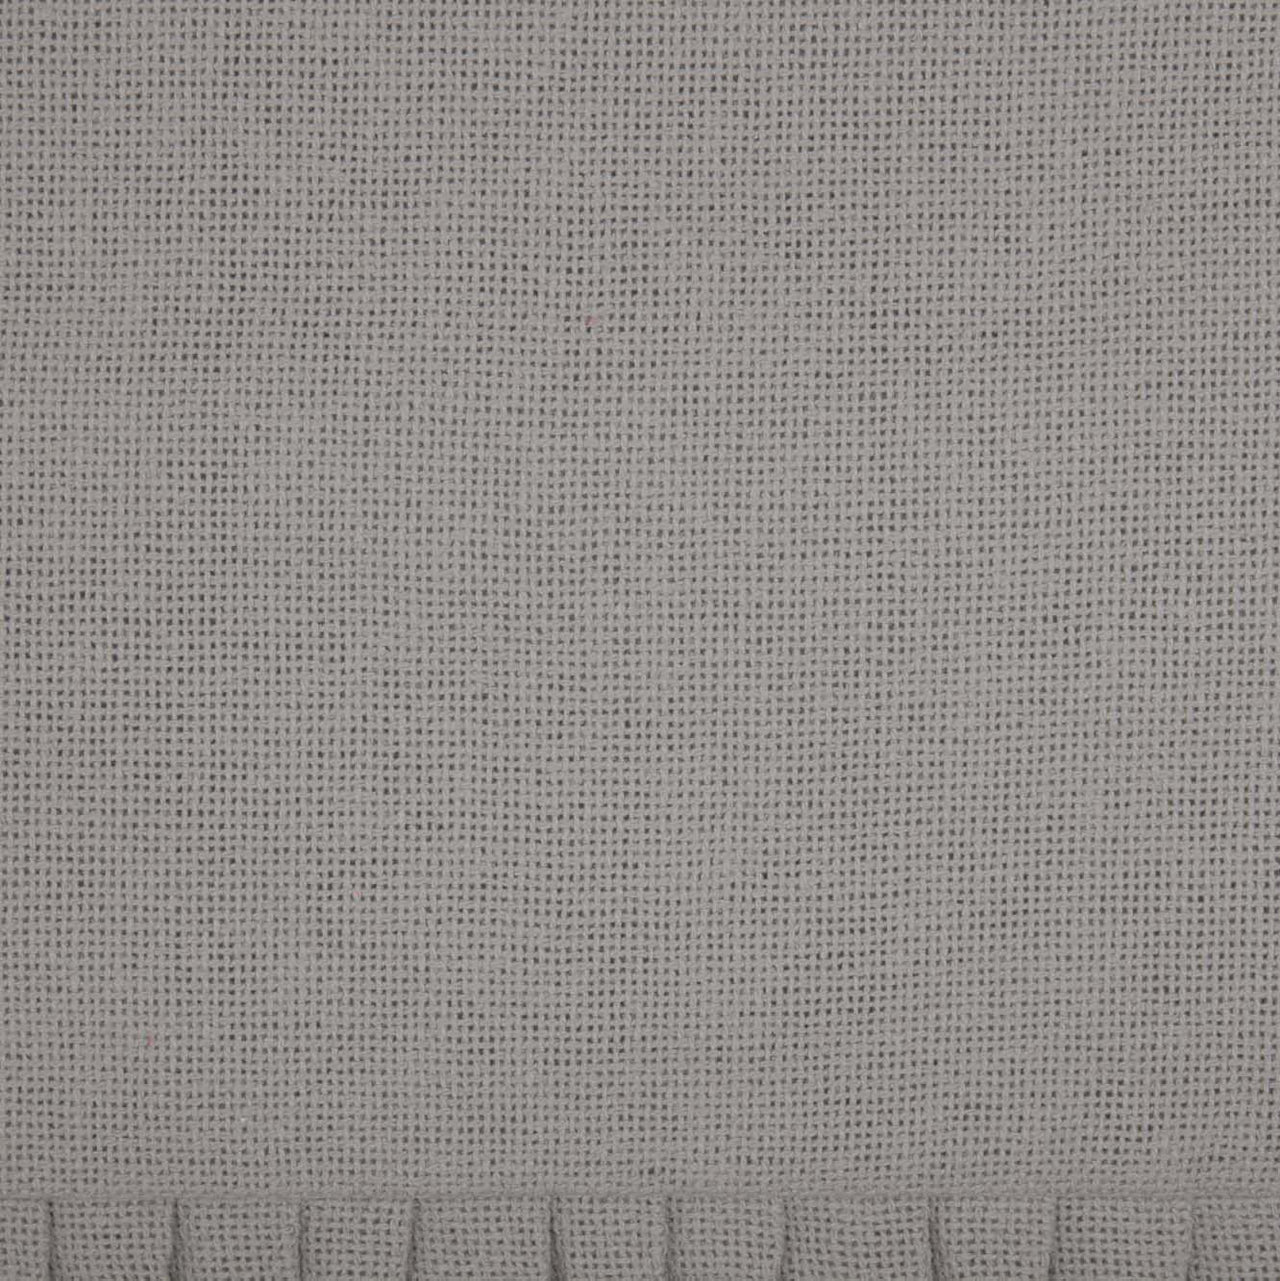 Burlap Dove Grey Pillow w/ Fringed Ruffle 18x18 VHC Brands